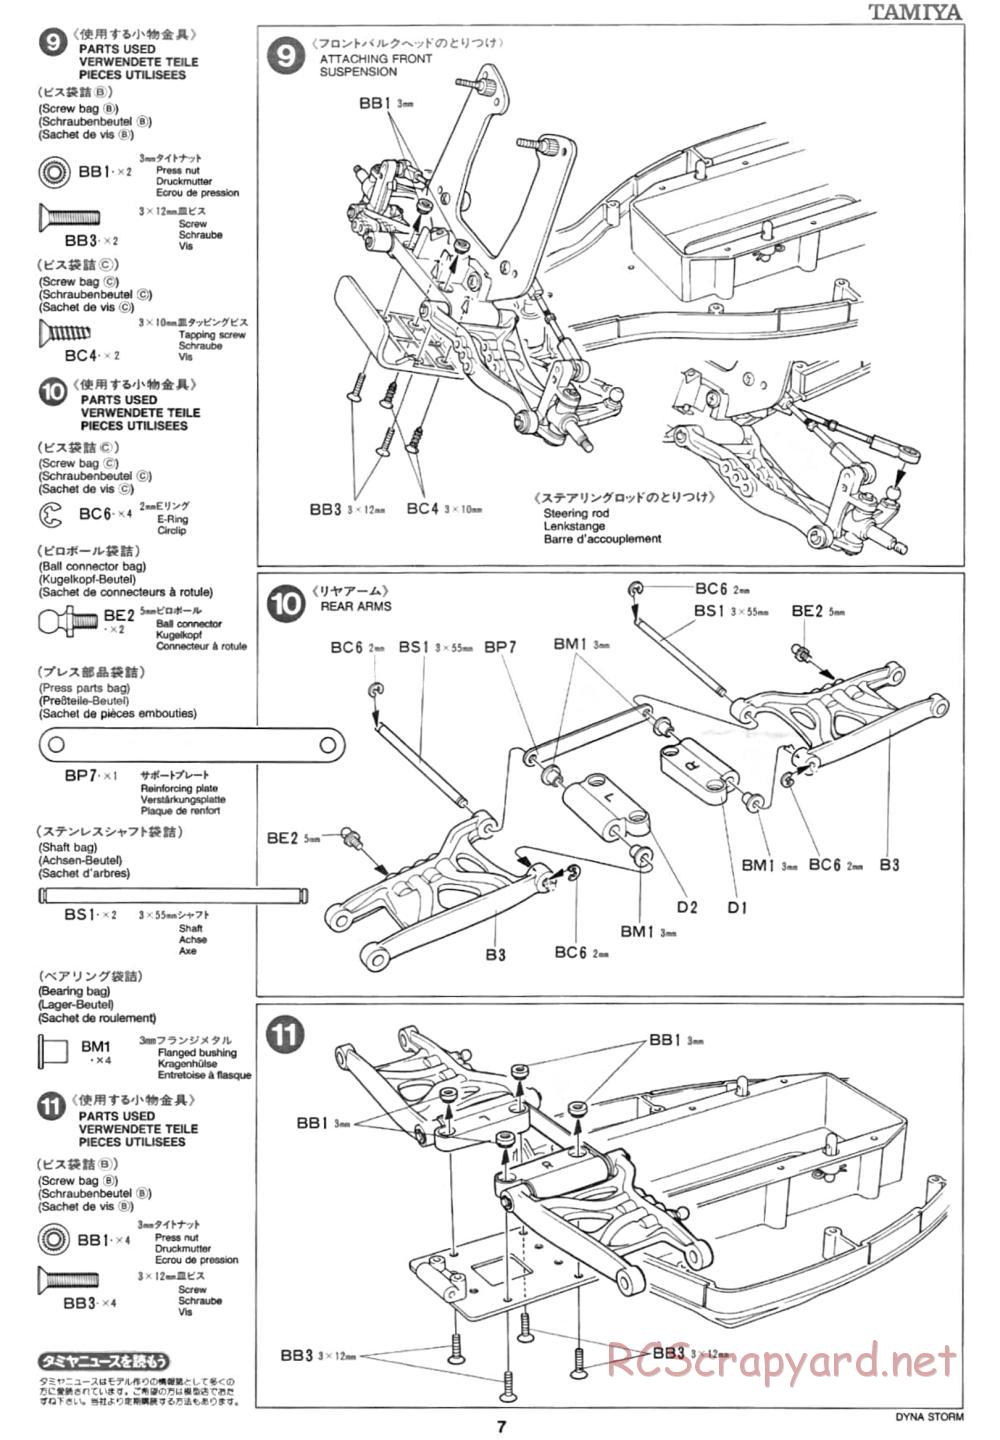 Tamiya - Dyna Storm Chassis - Manual - Page 7